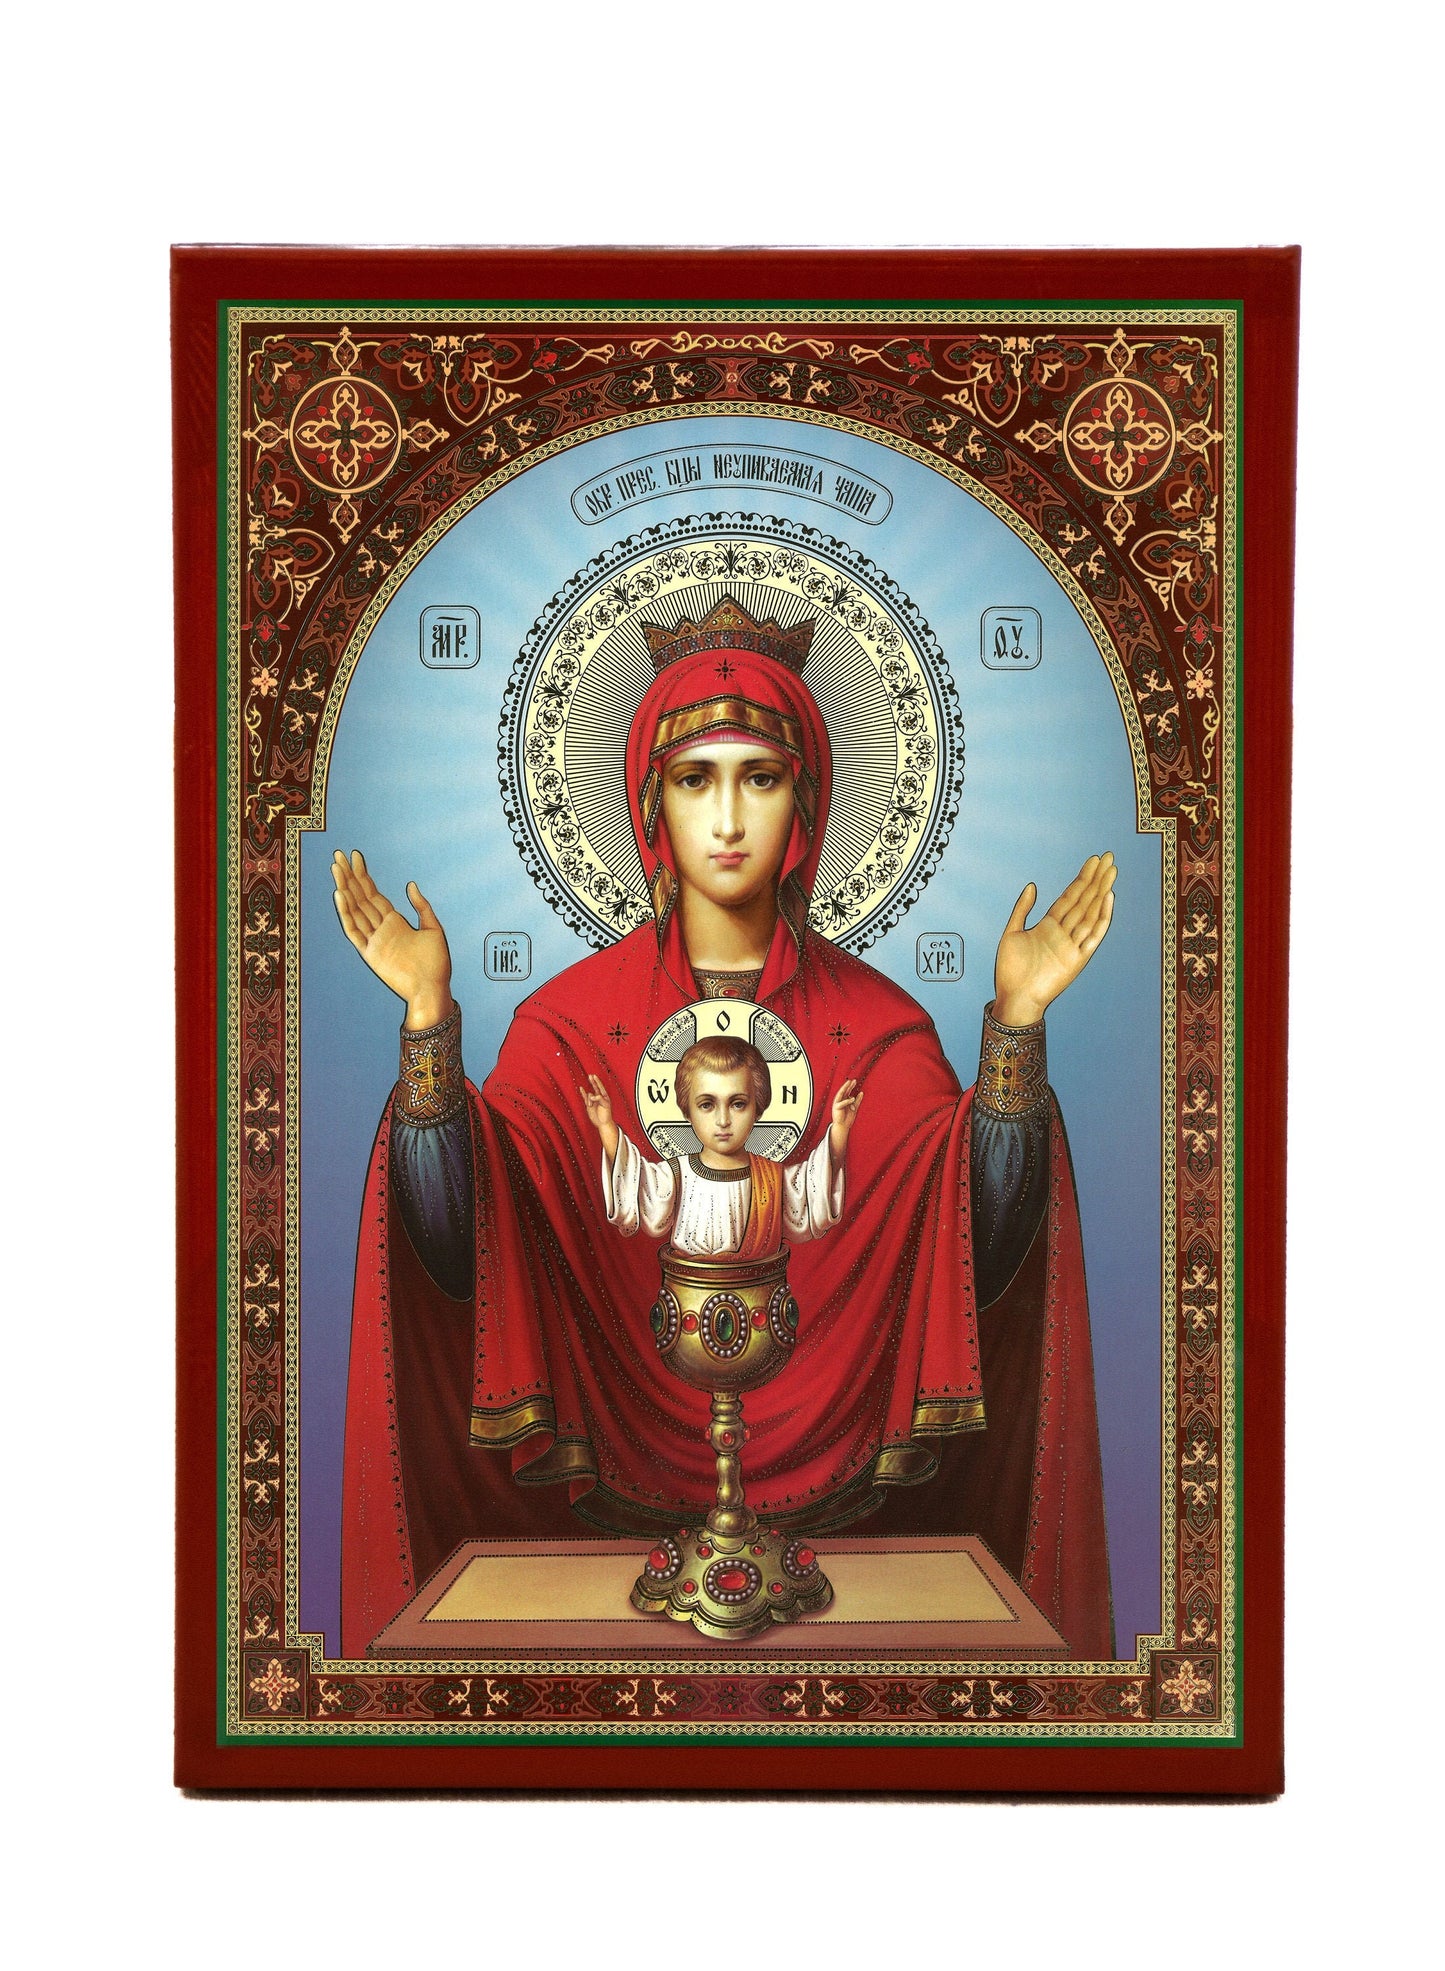 Virgin Mary icon Panagia, Handmade Greek Orthodox Icon Theotokos, Mother of God Byzantine art wall hanging wood plaque icon, religious decor TheHolyArt